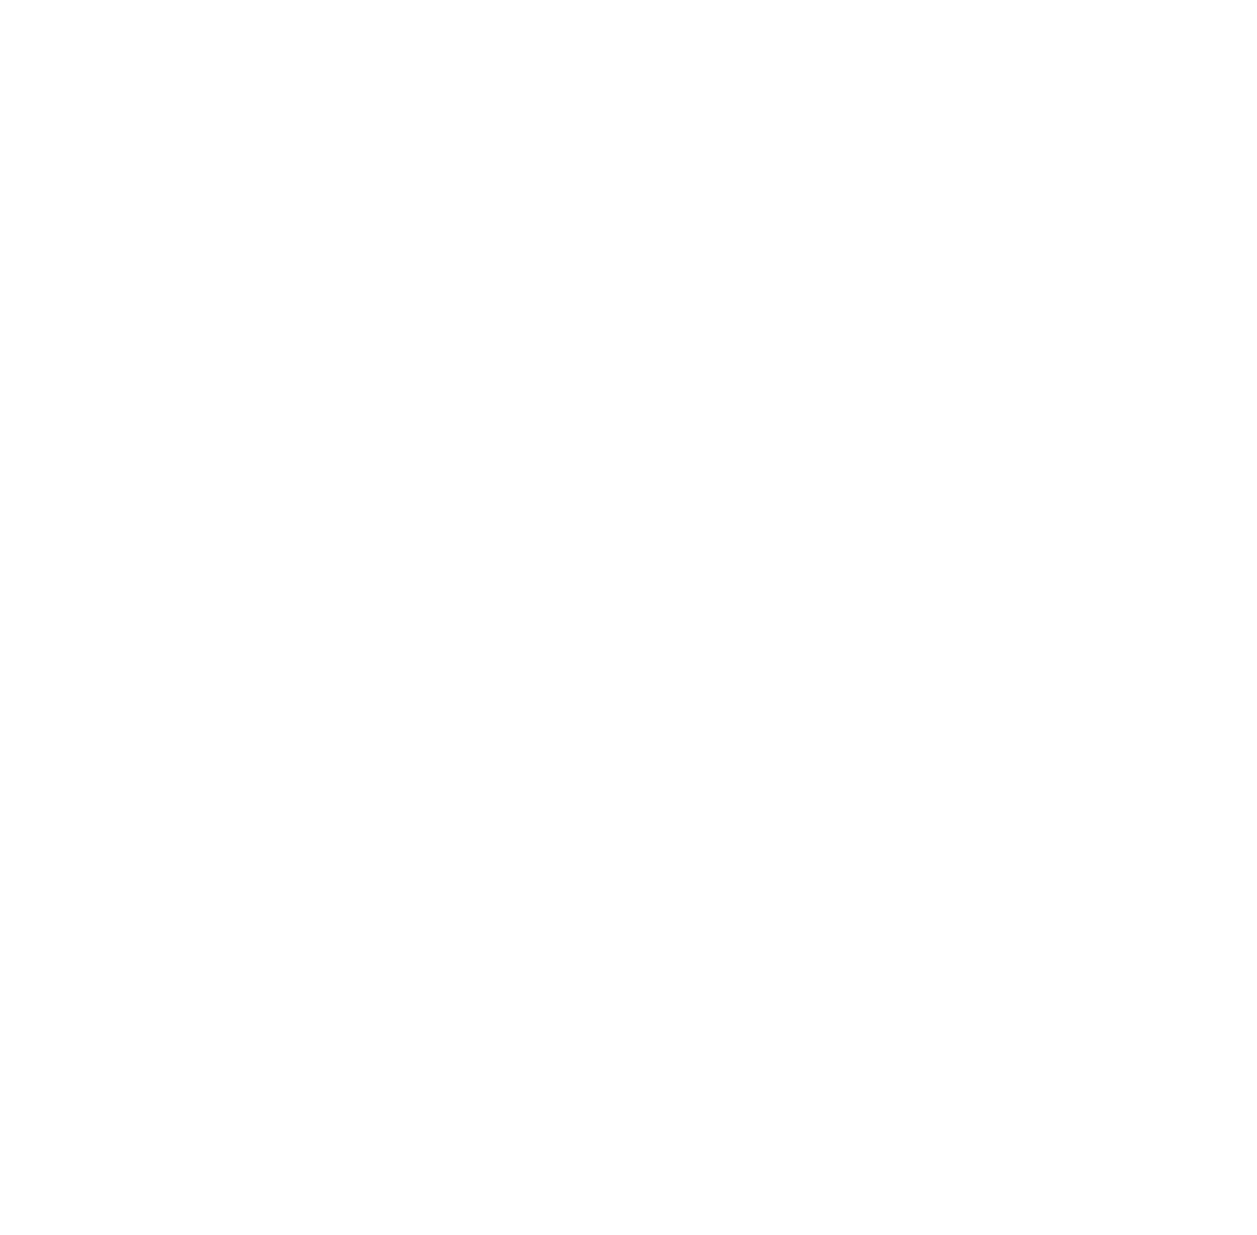 Certified Entomologist logo